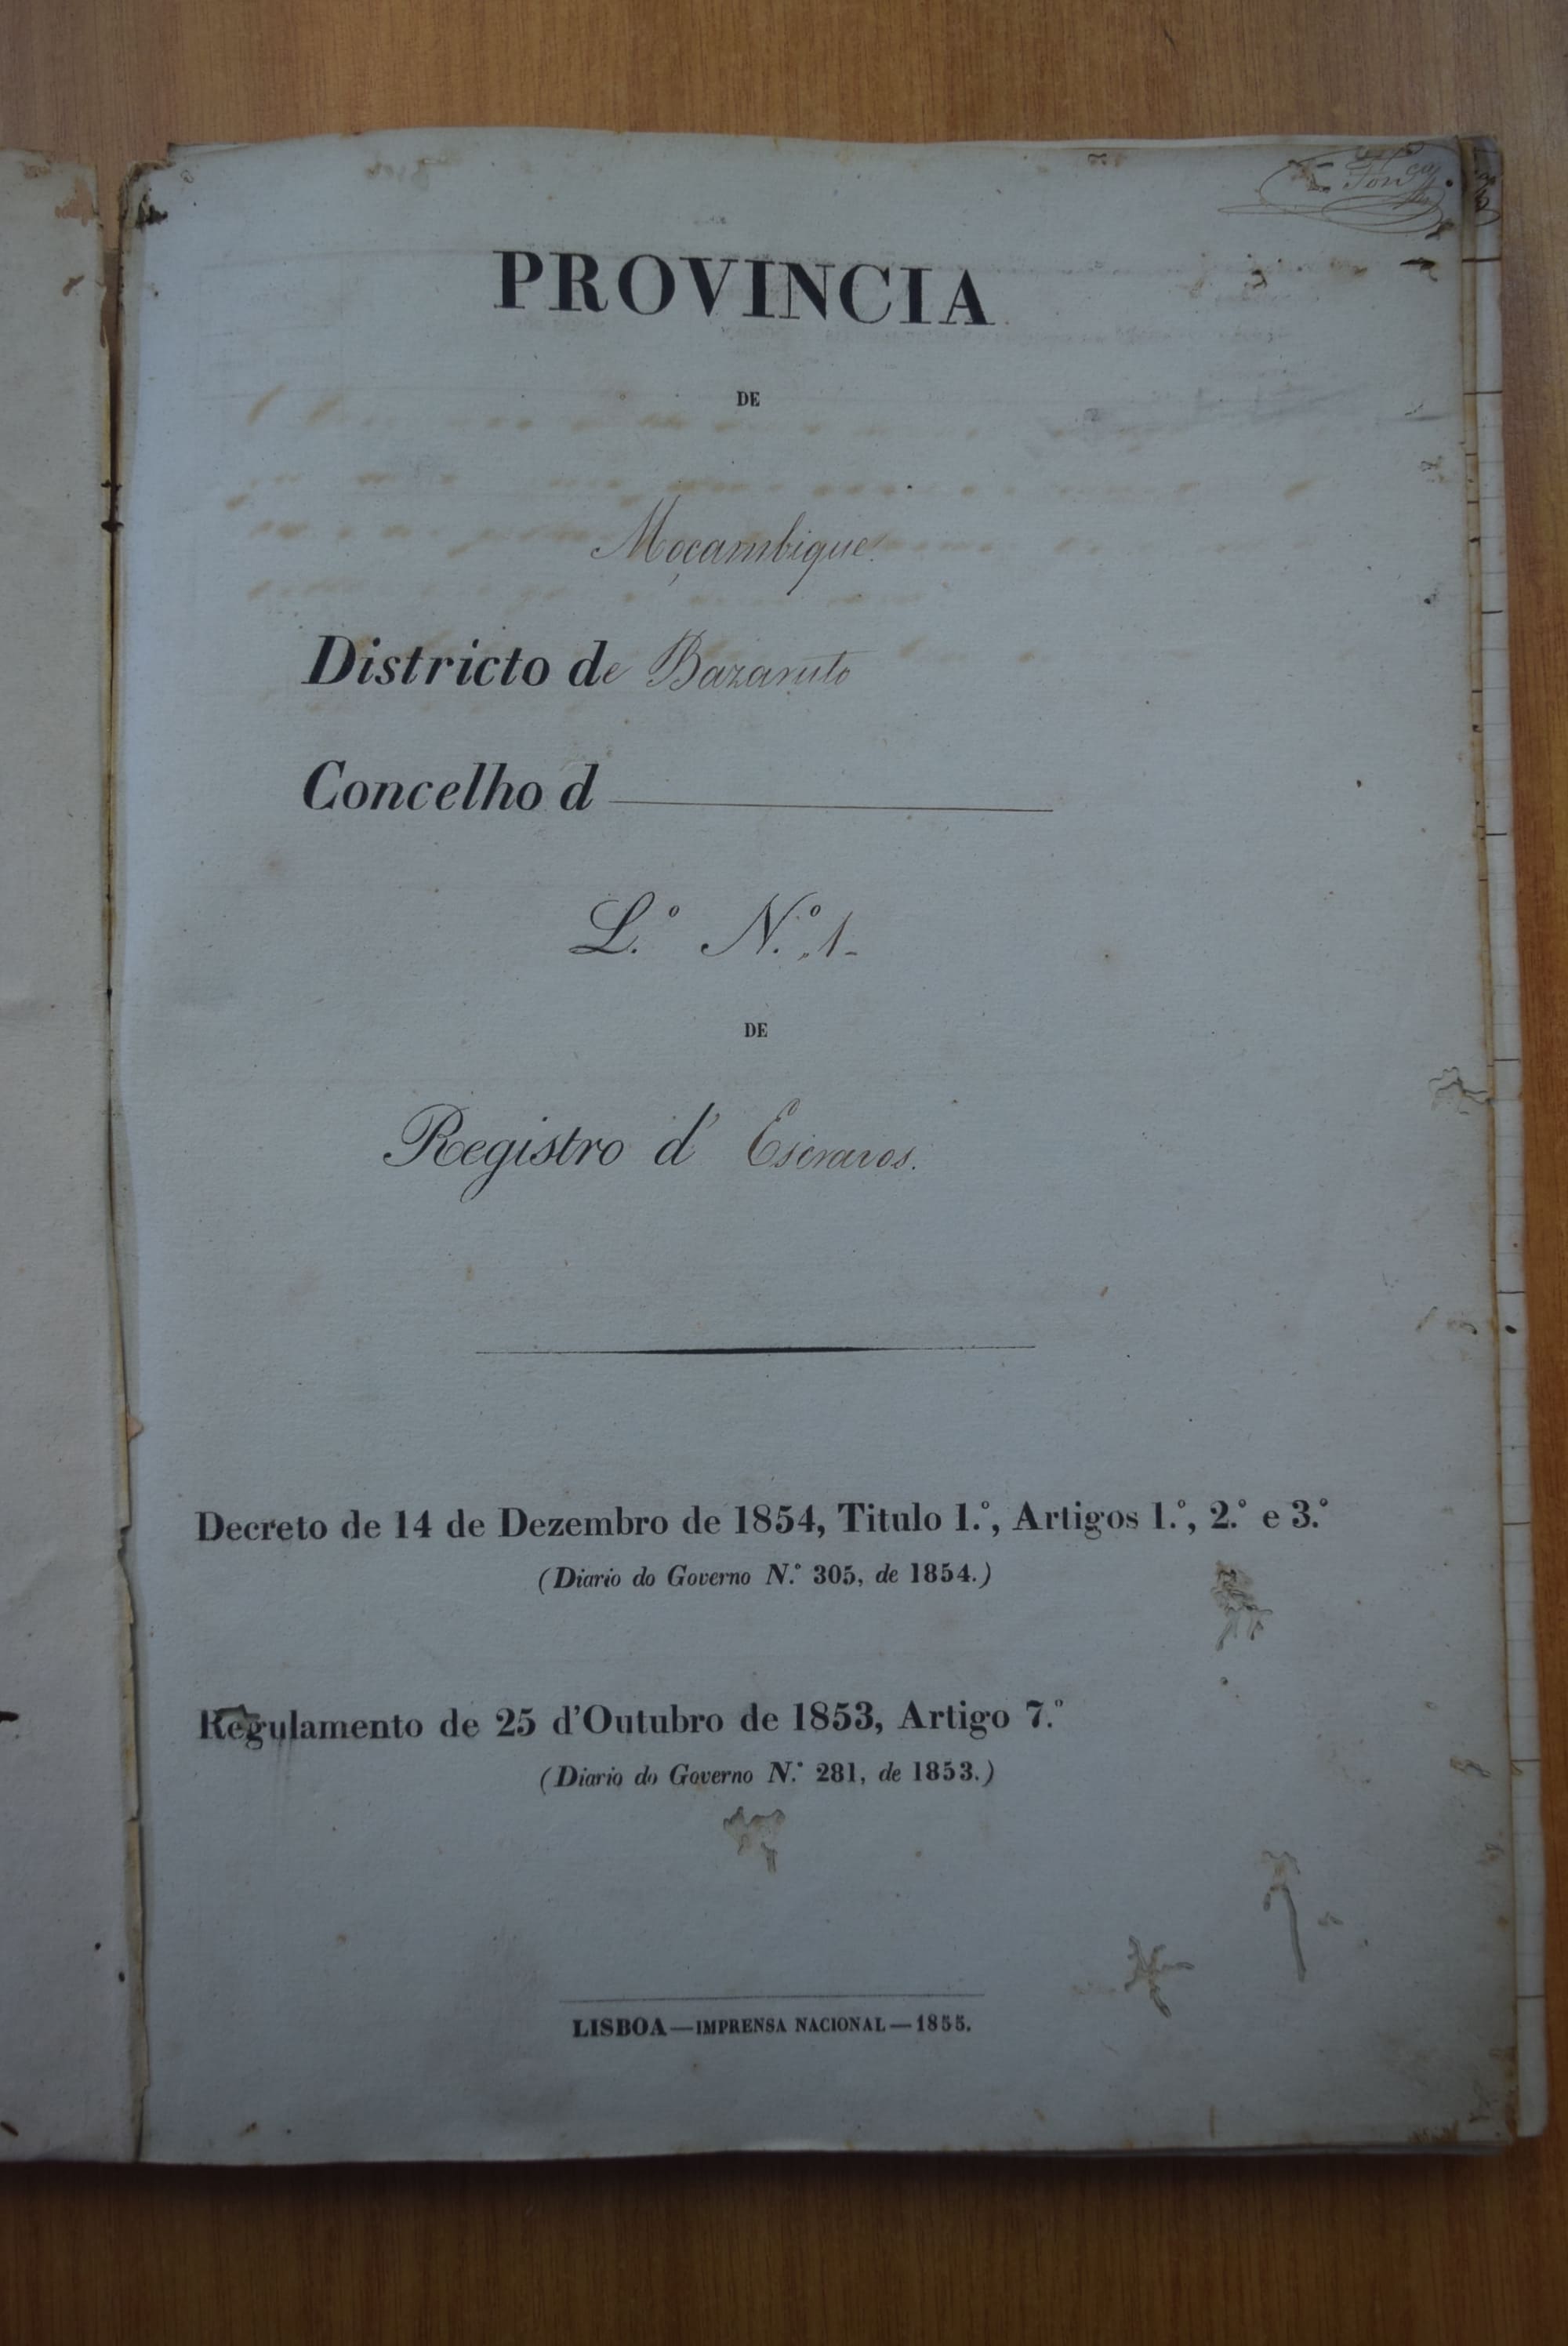 Register of Slaves of Bazaruto